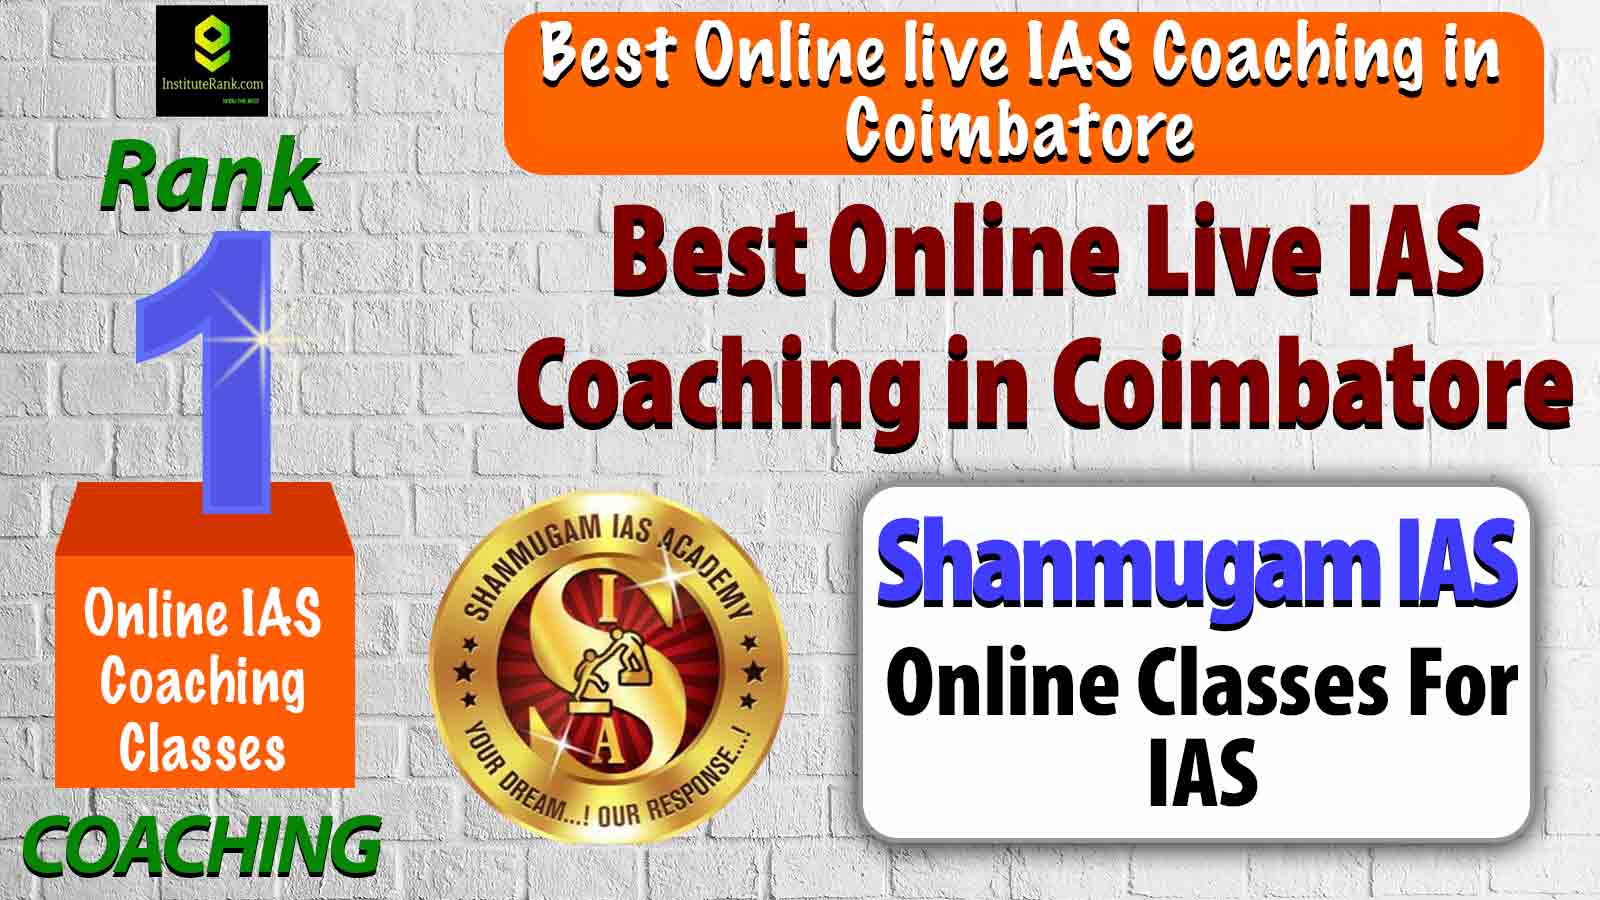 Top Online live IAS Coaching in Coimbatore